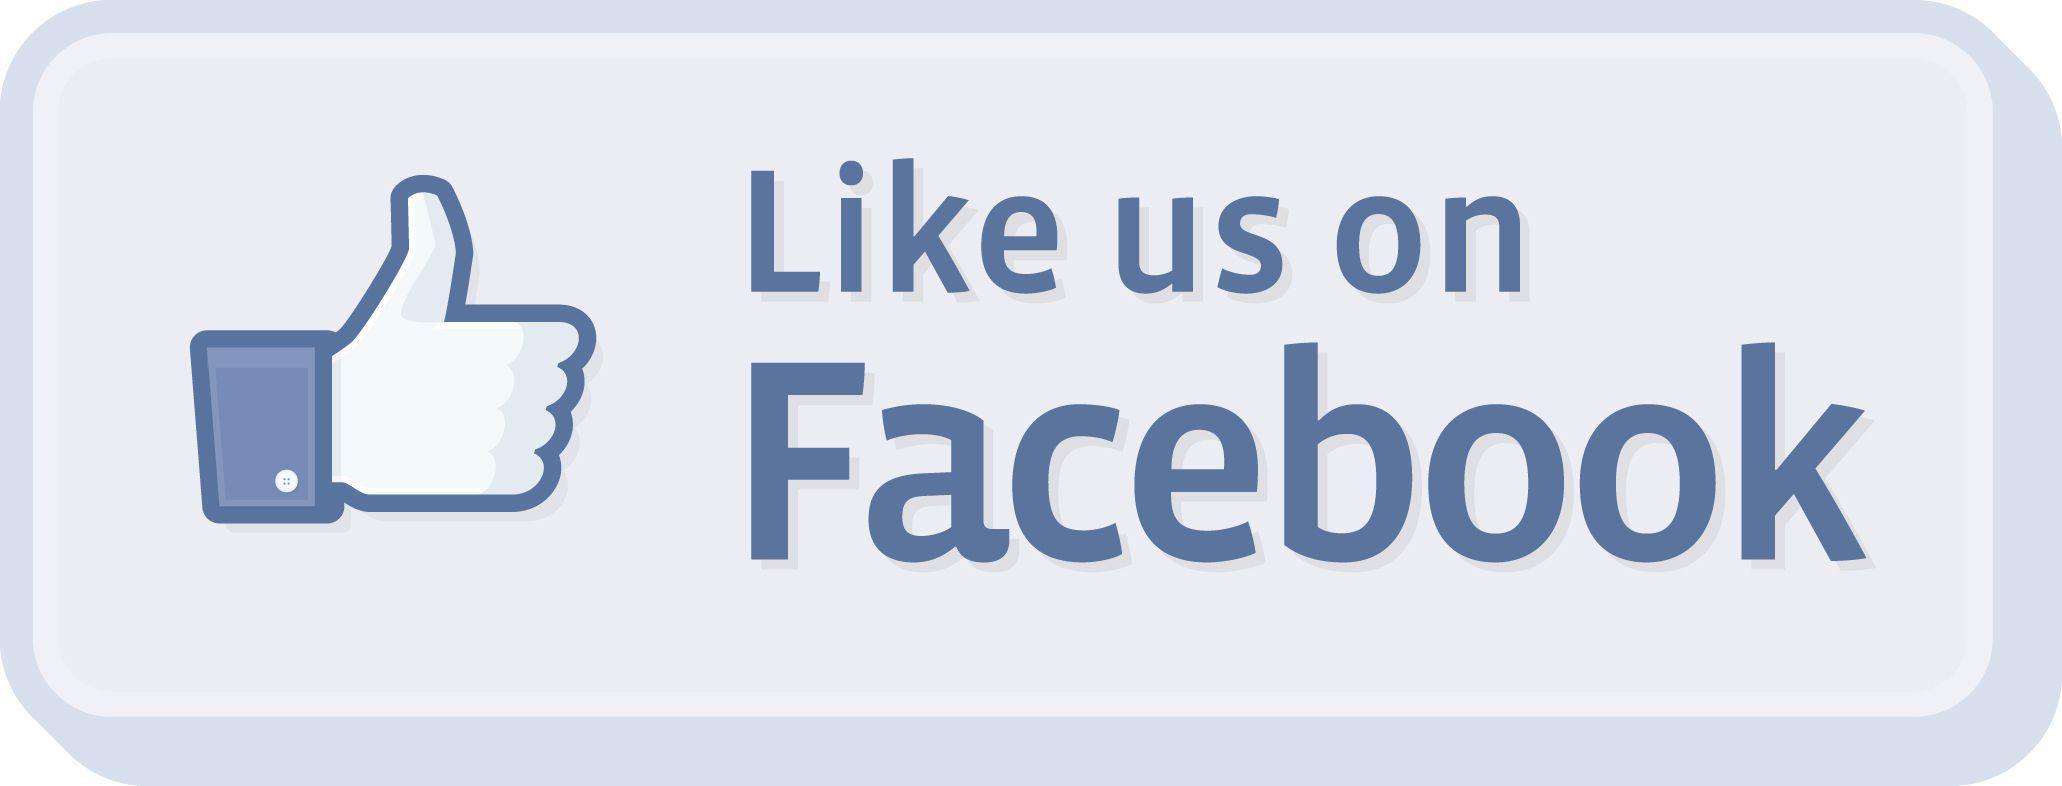 Follow Us On Facebook Logo - like-us-on-facebook-logo